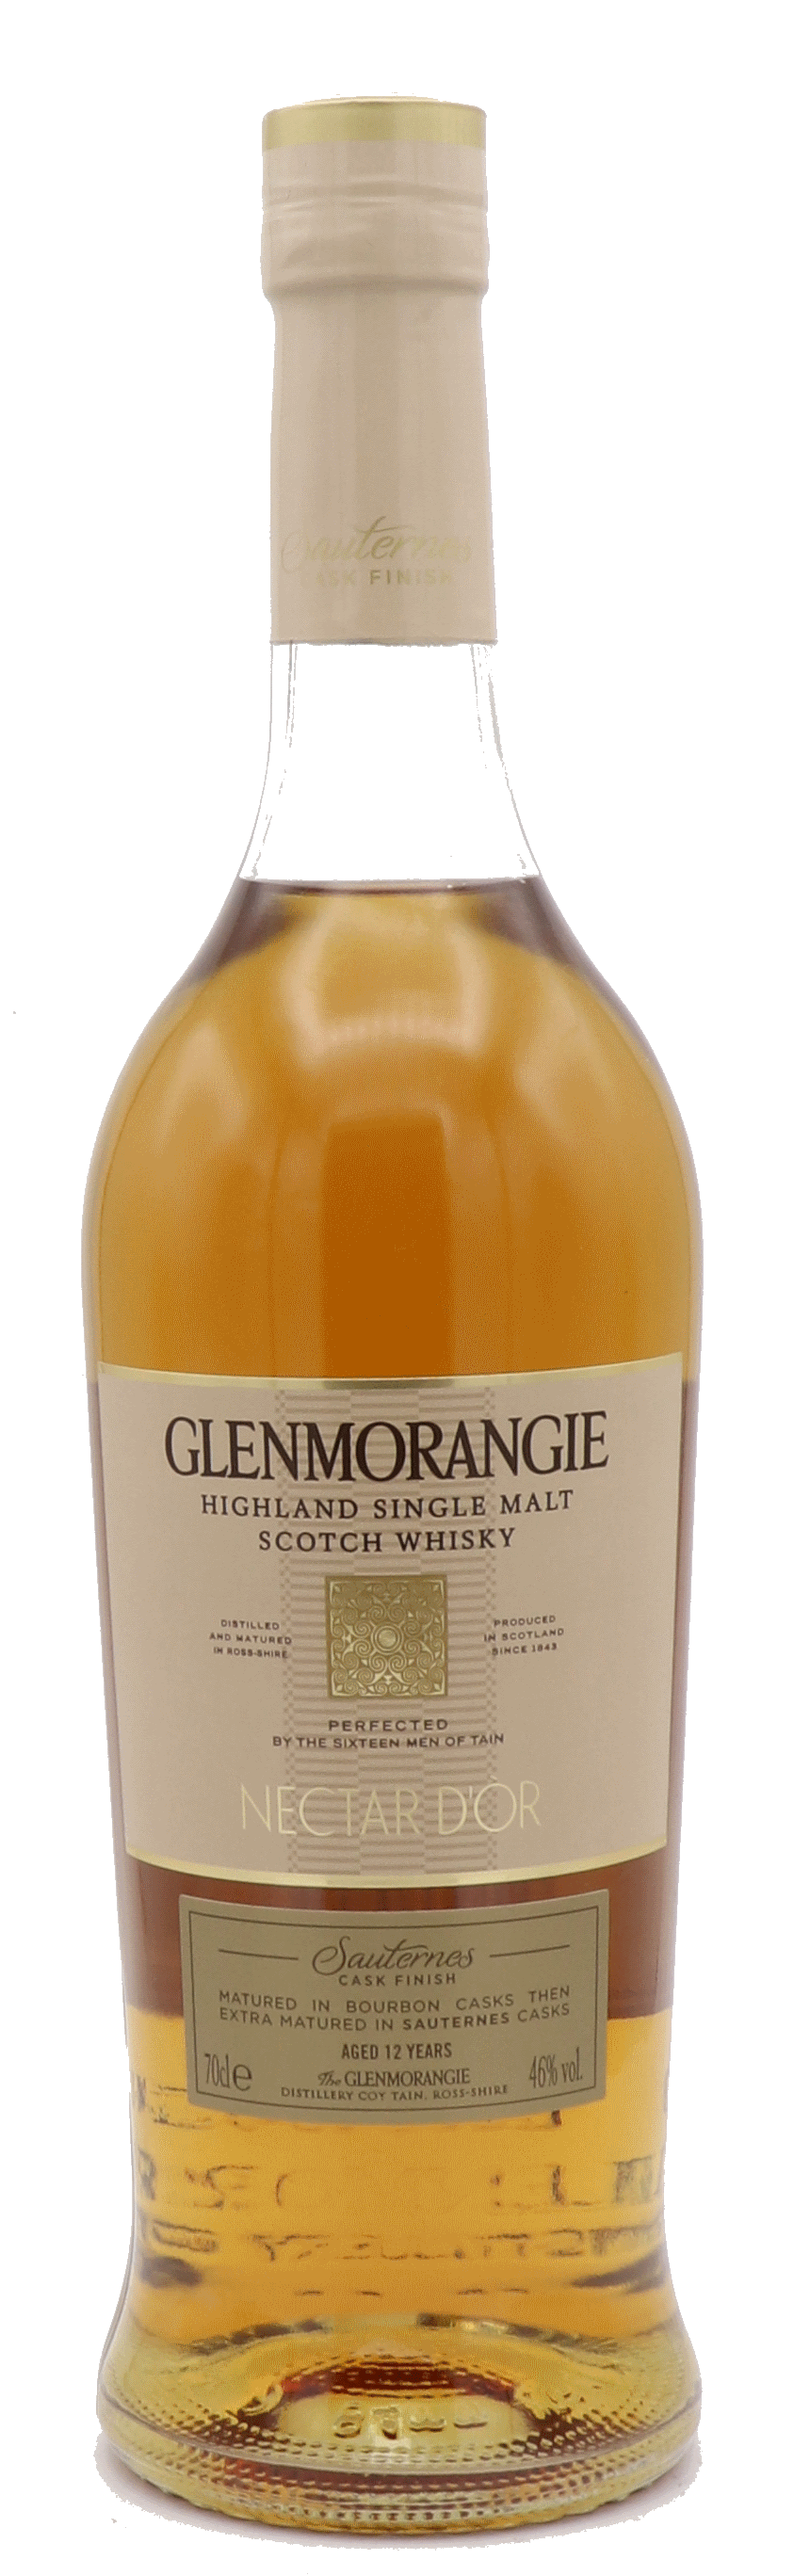 Glenmorangie Nectar d´or